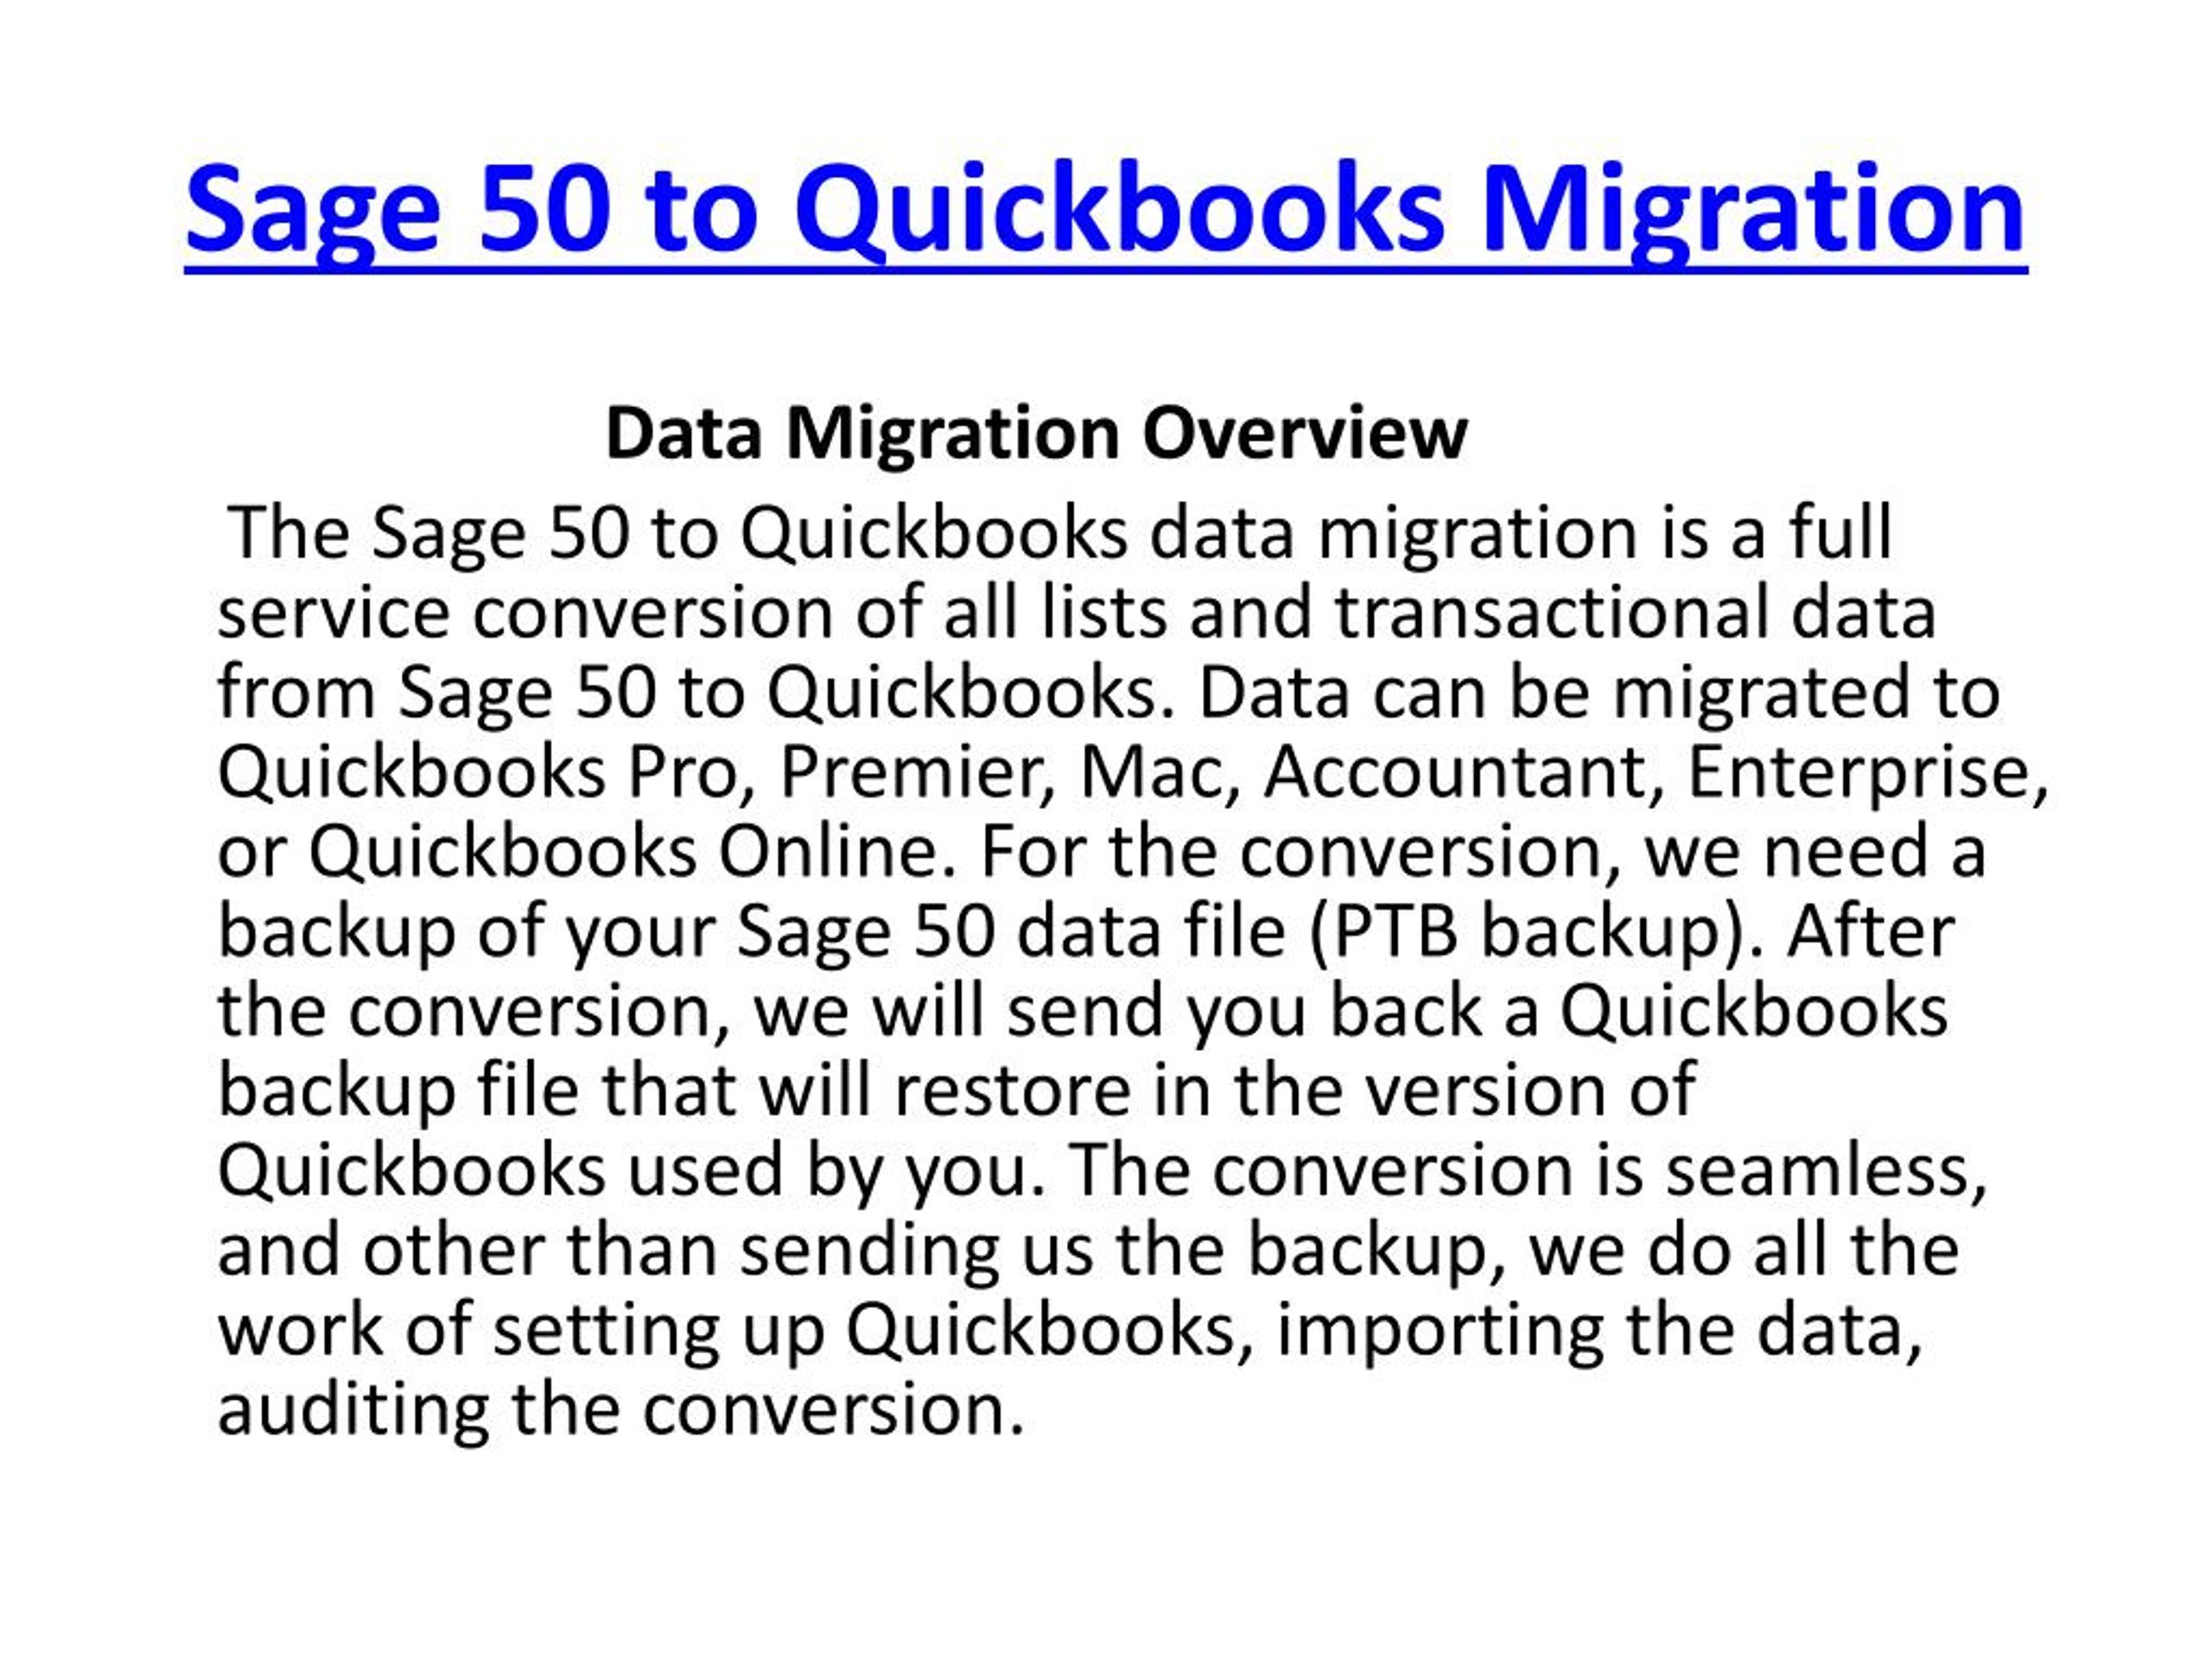 quickbooks for mac migration